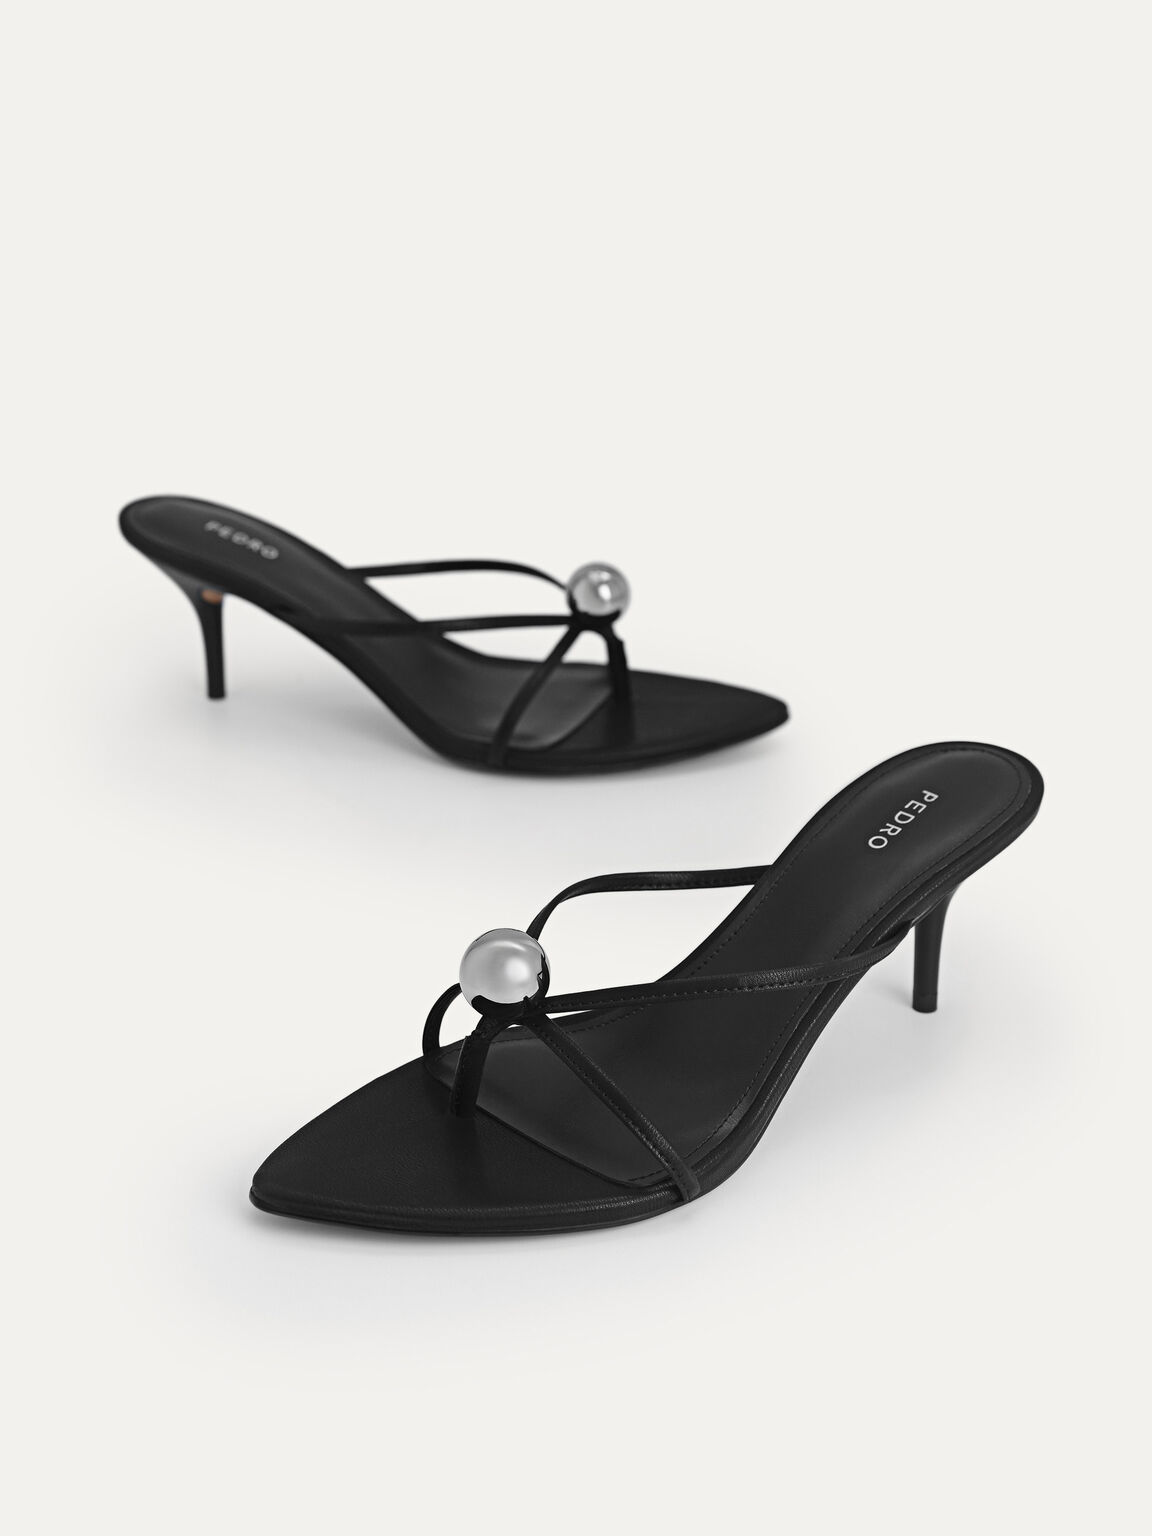 Orb Lace-Up Heeled Sandals, Black